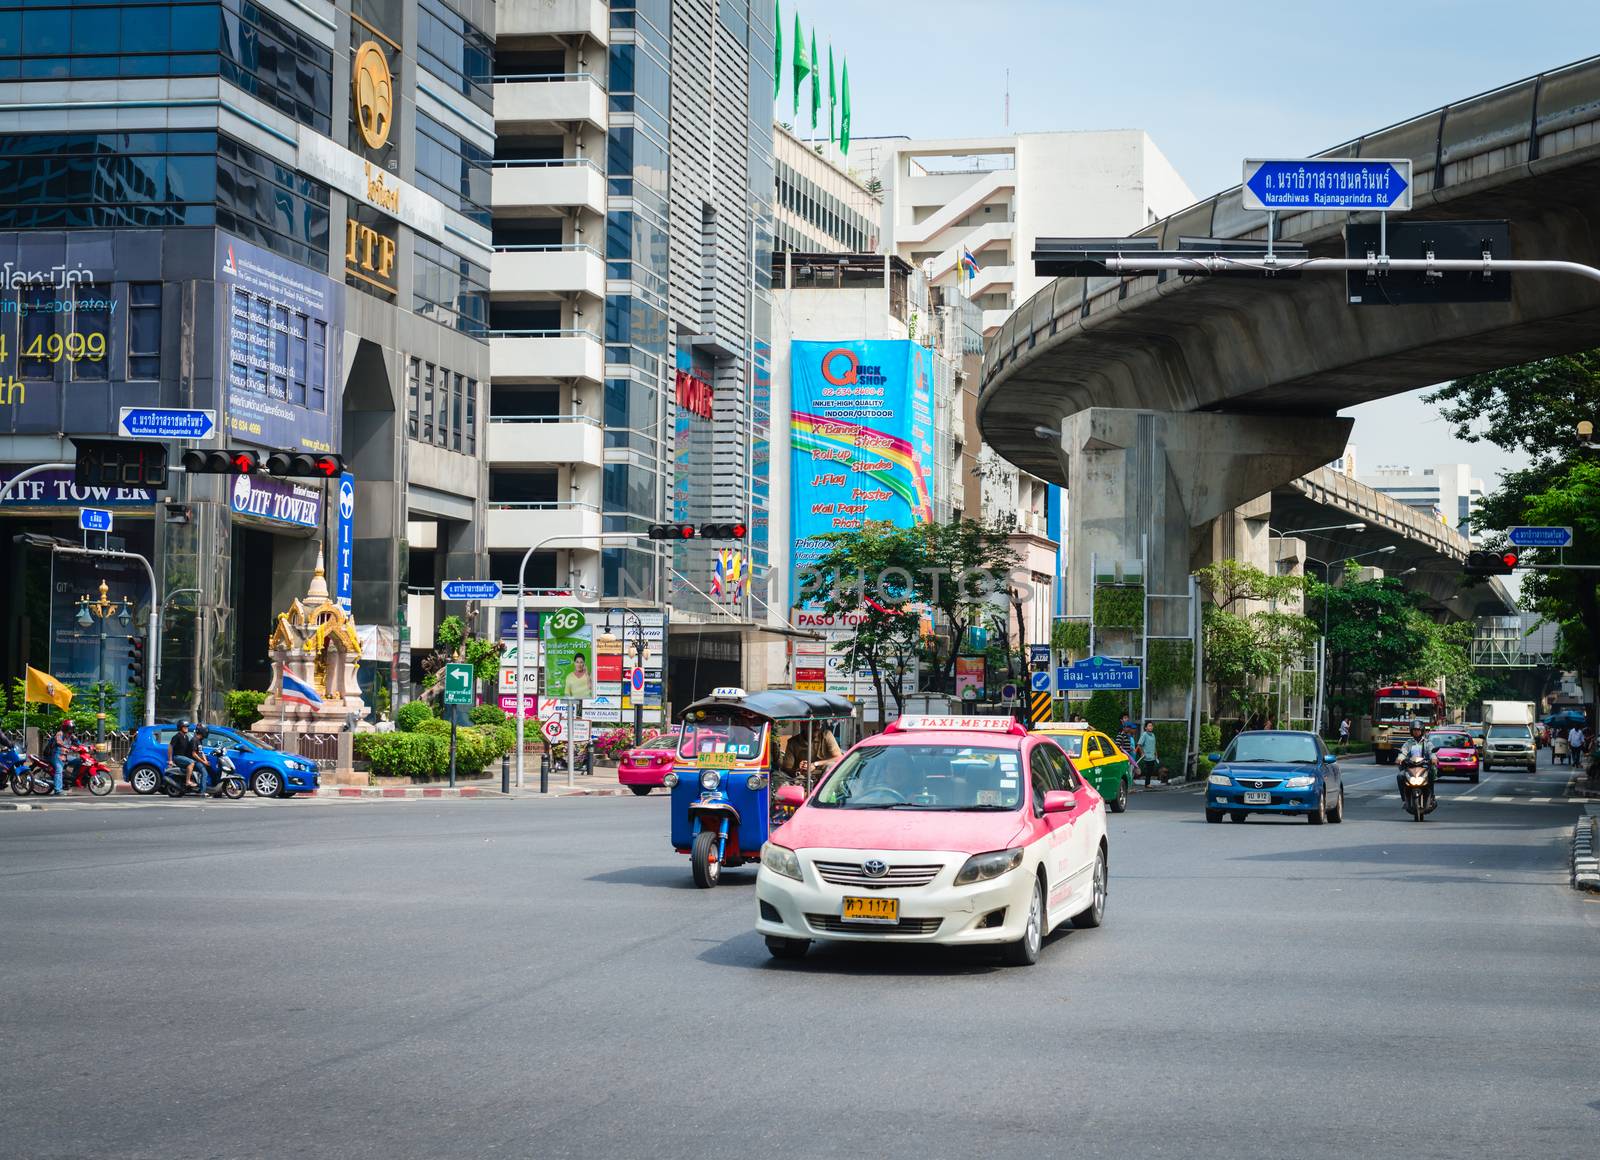  Taxi and traditional tuk-tuk on Bangkok street by iryna_rasko